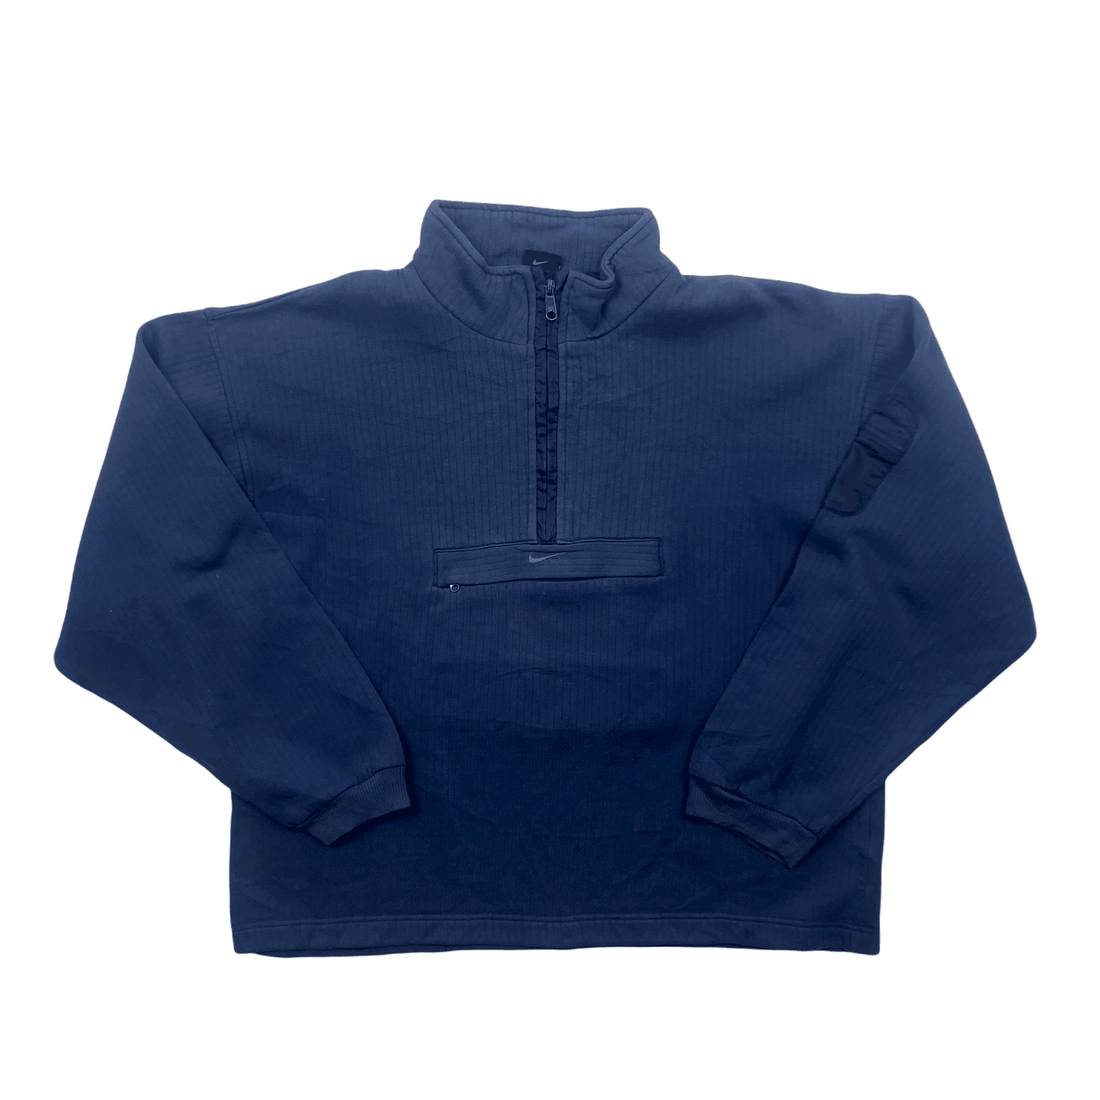 Vintage 90s Navy Blue Nike Centre Swoosh Oversized Quarter Zip Sweatshirt - Large (Recommended Size - Medium) - The Streetwear Studio